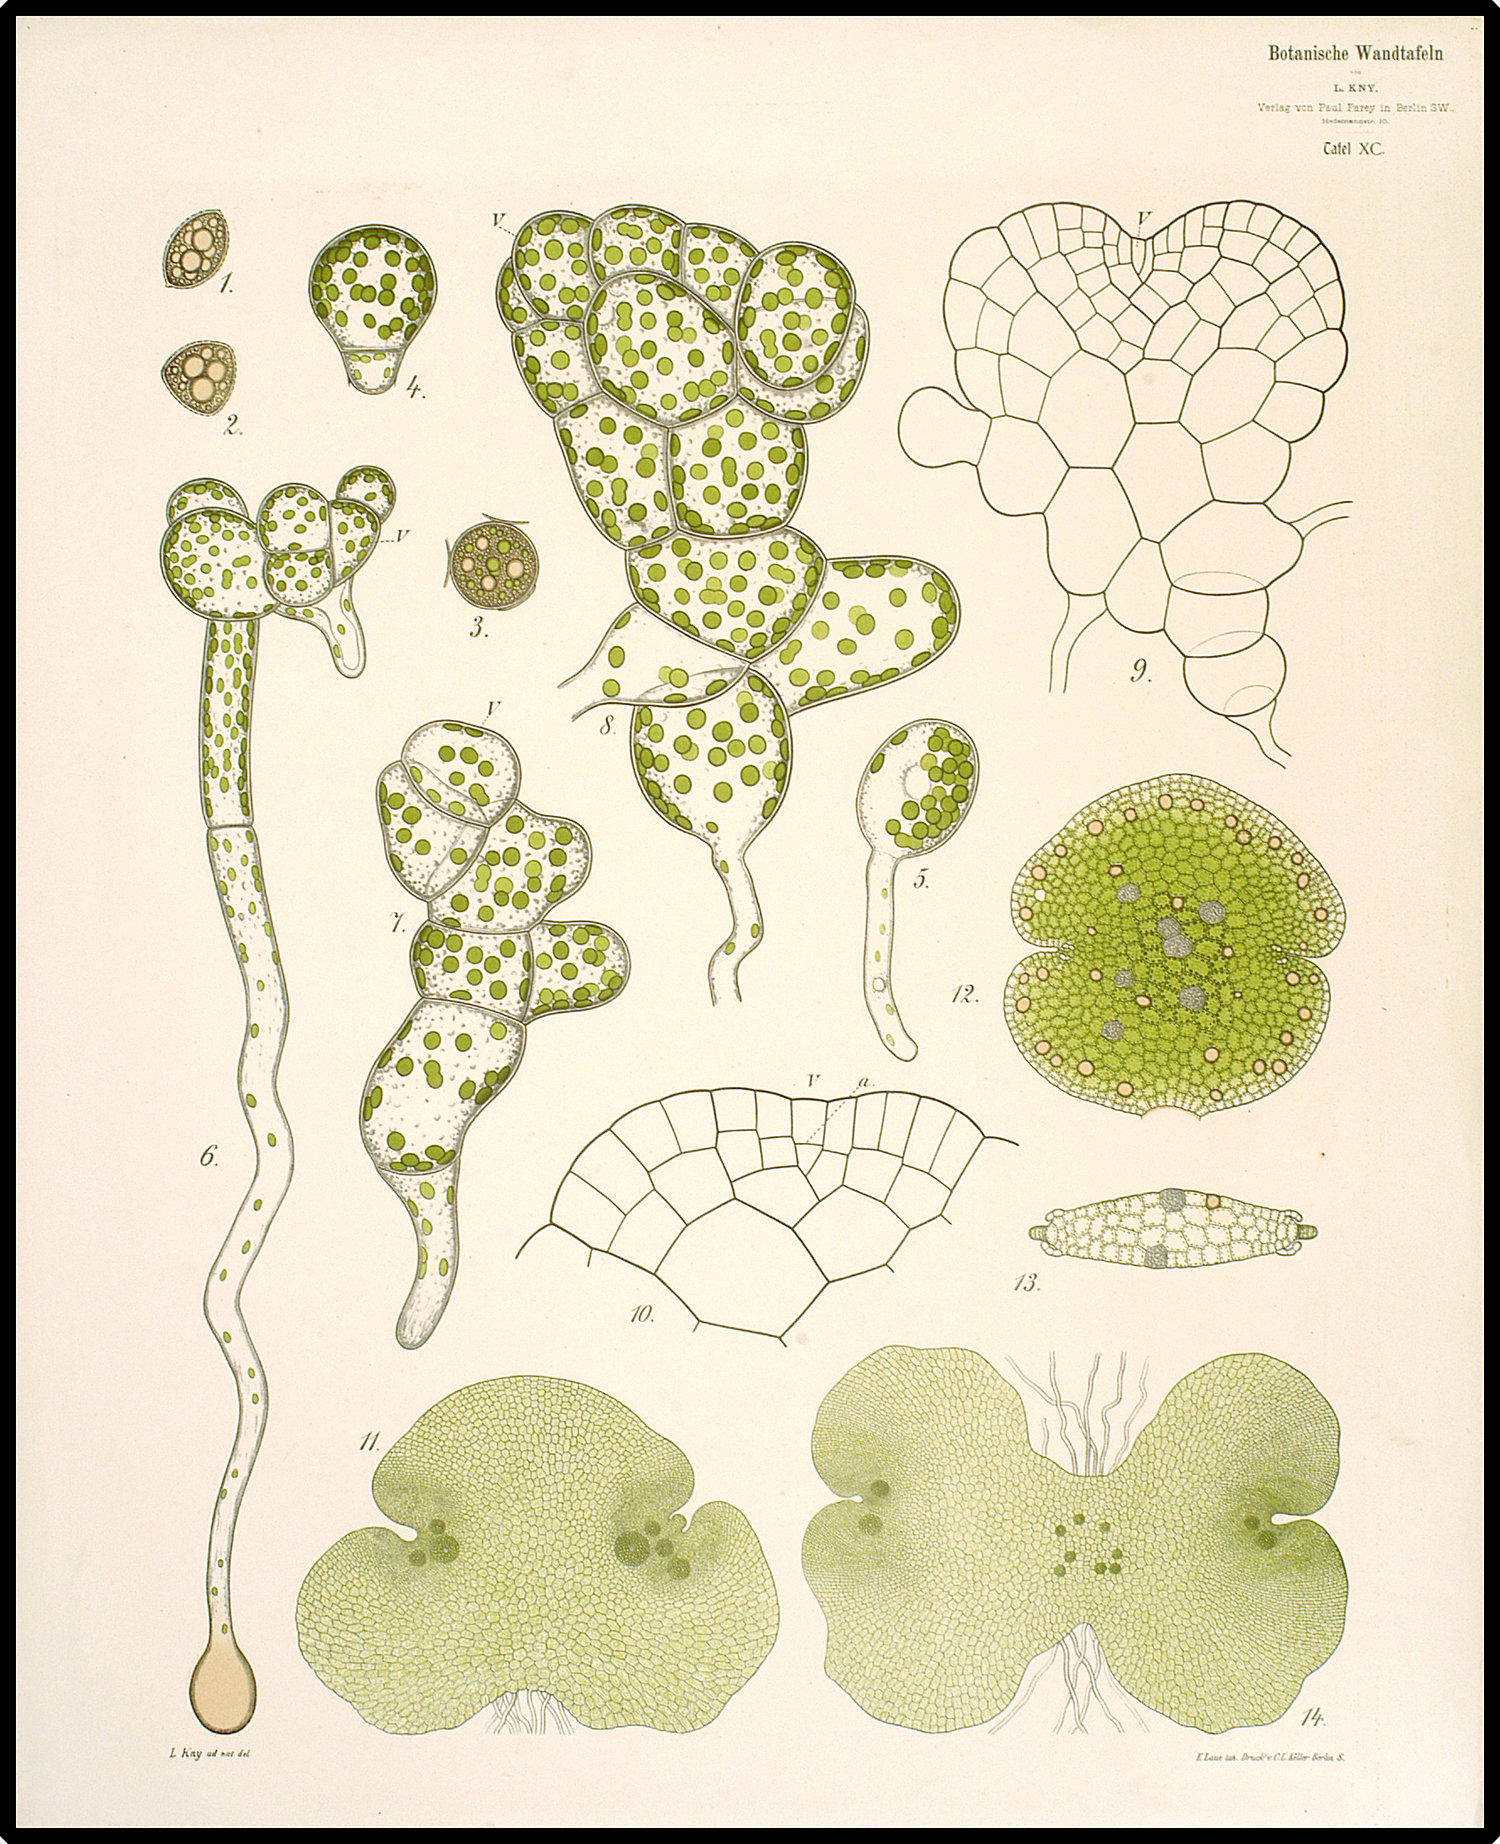 Spore germination and gemma